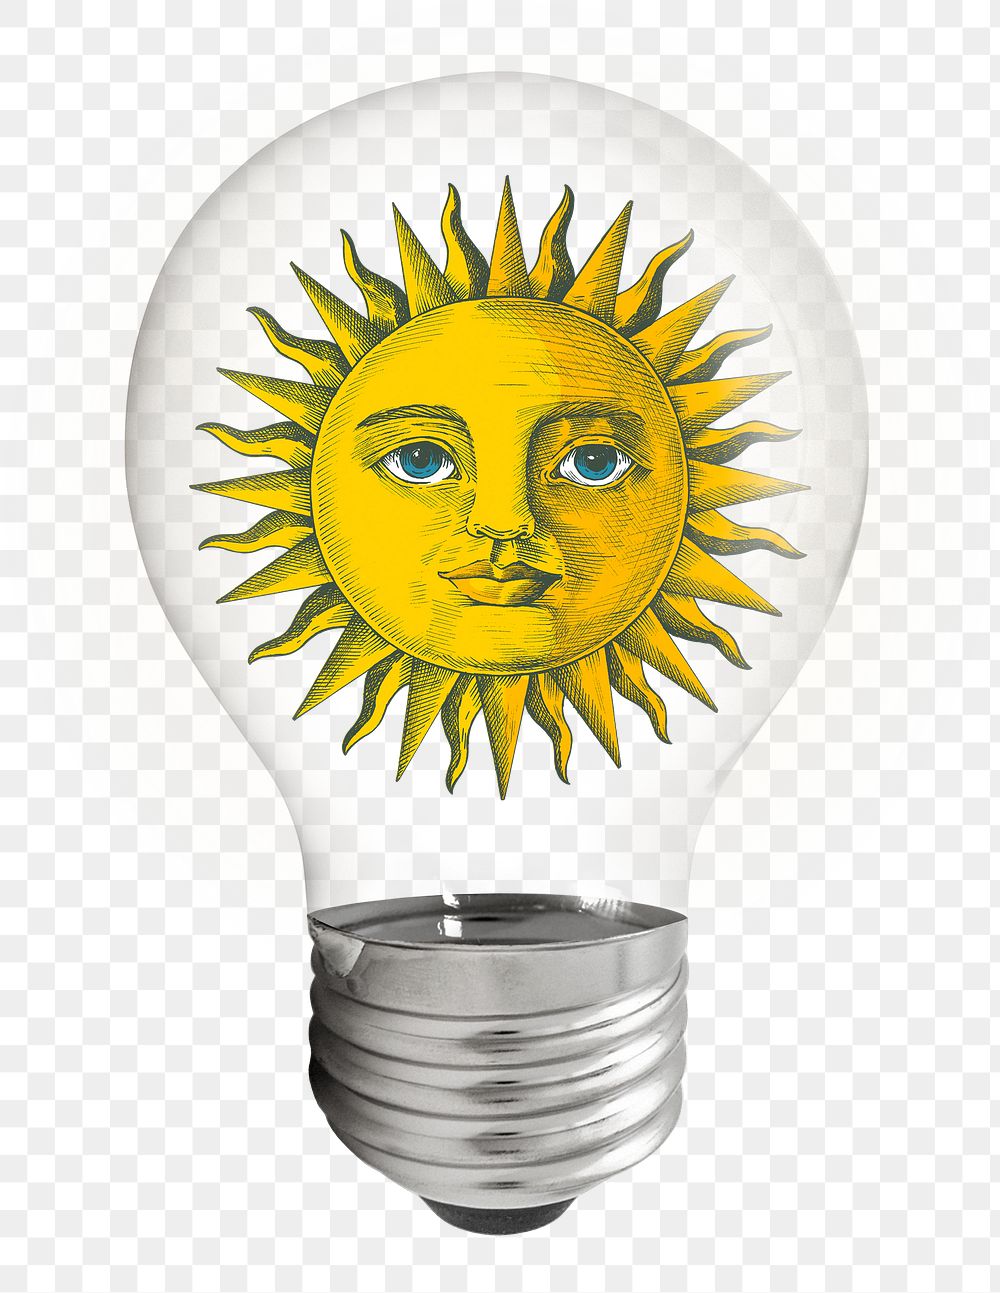 Celestial sun png sticker, light bulb art on transparent background